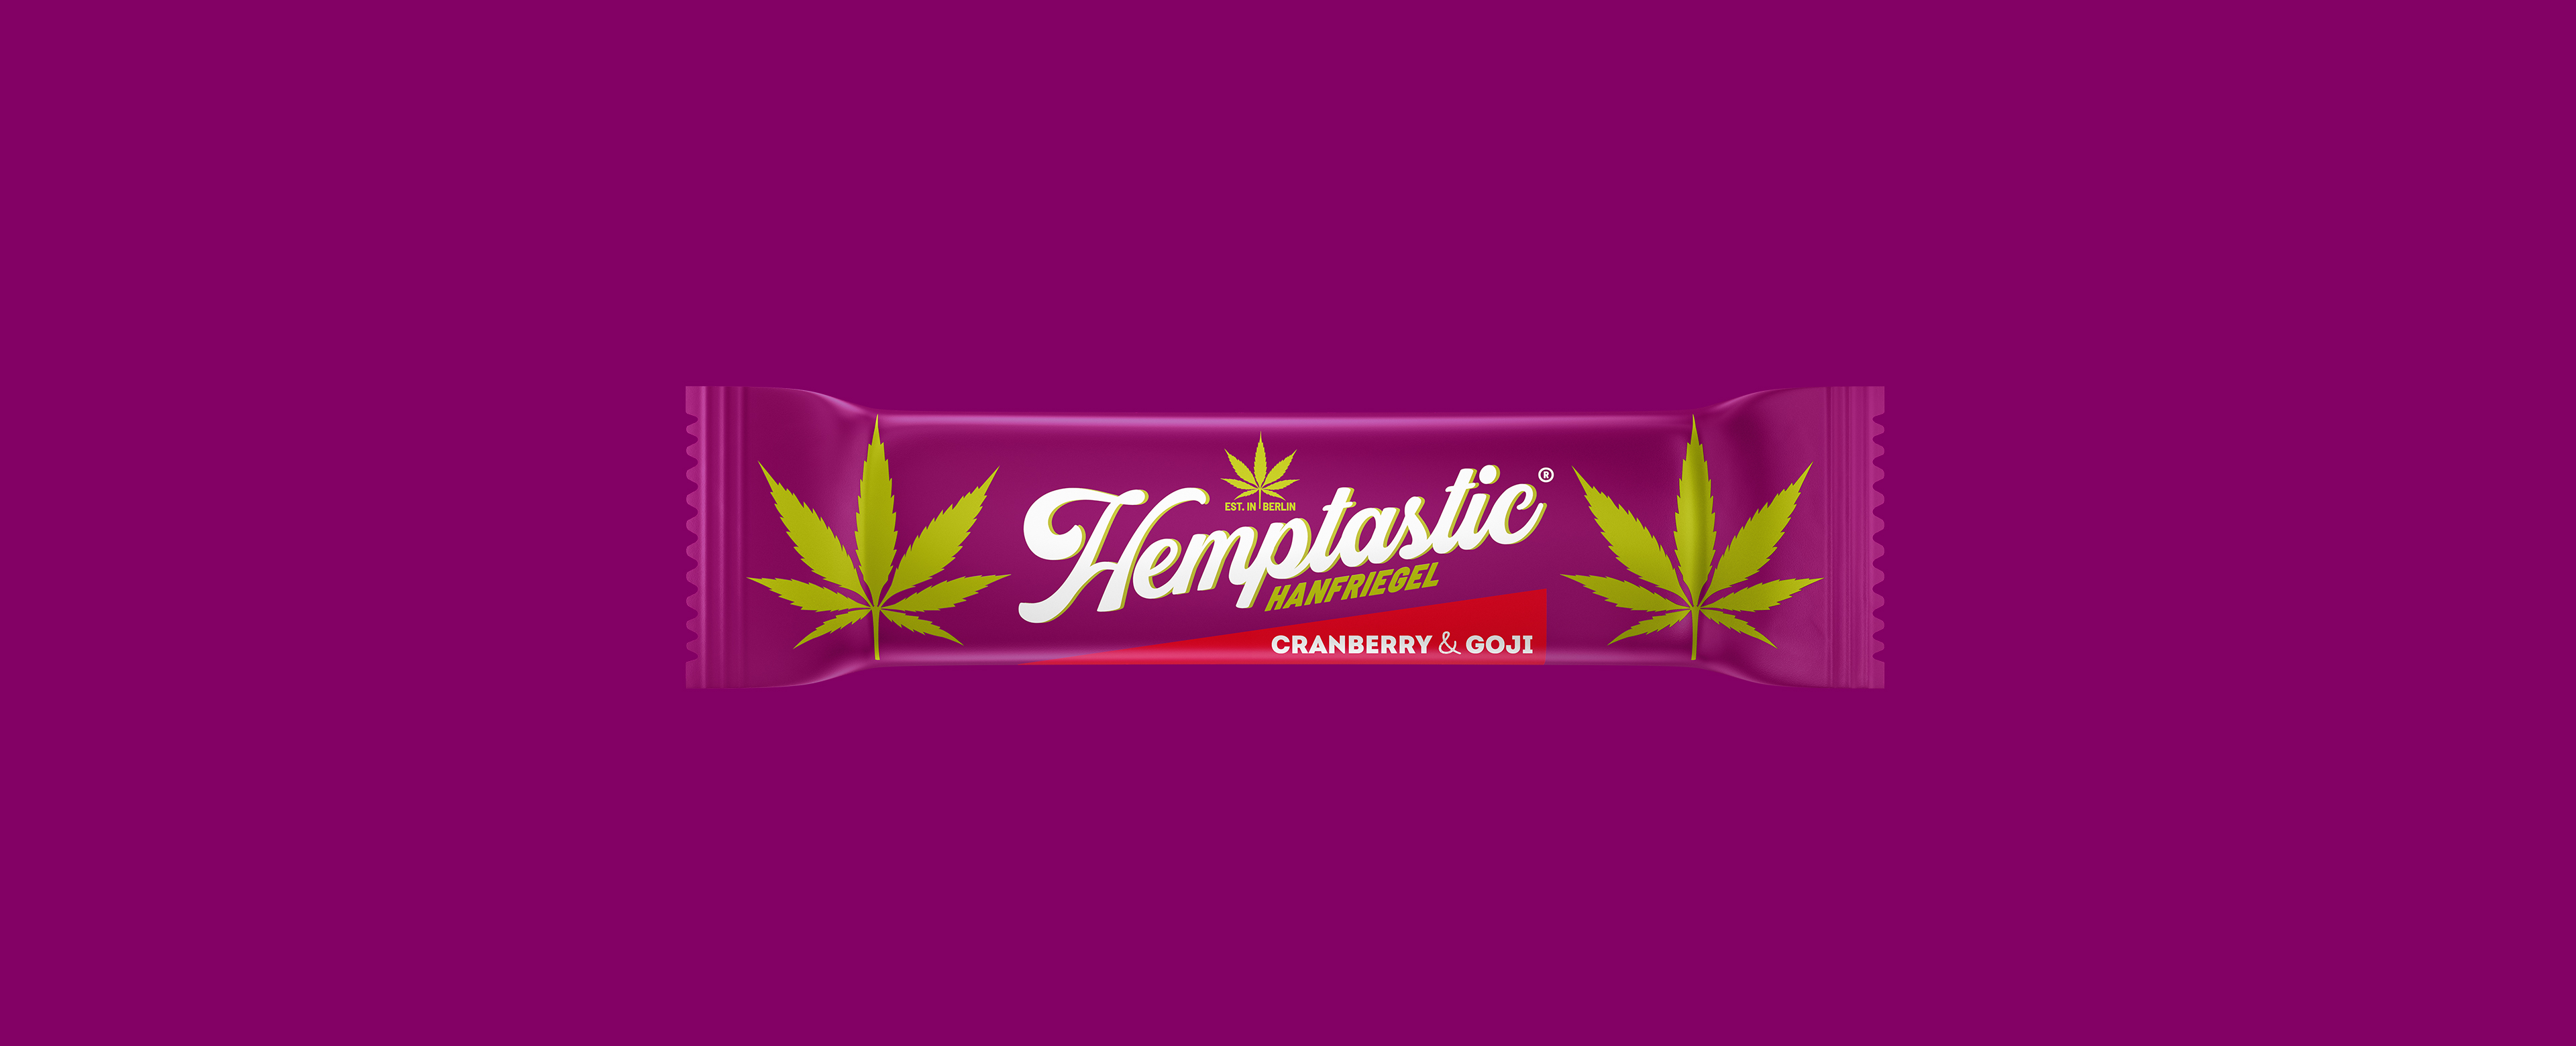 Hemptastic Hanfriegel Logo Marke